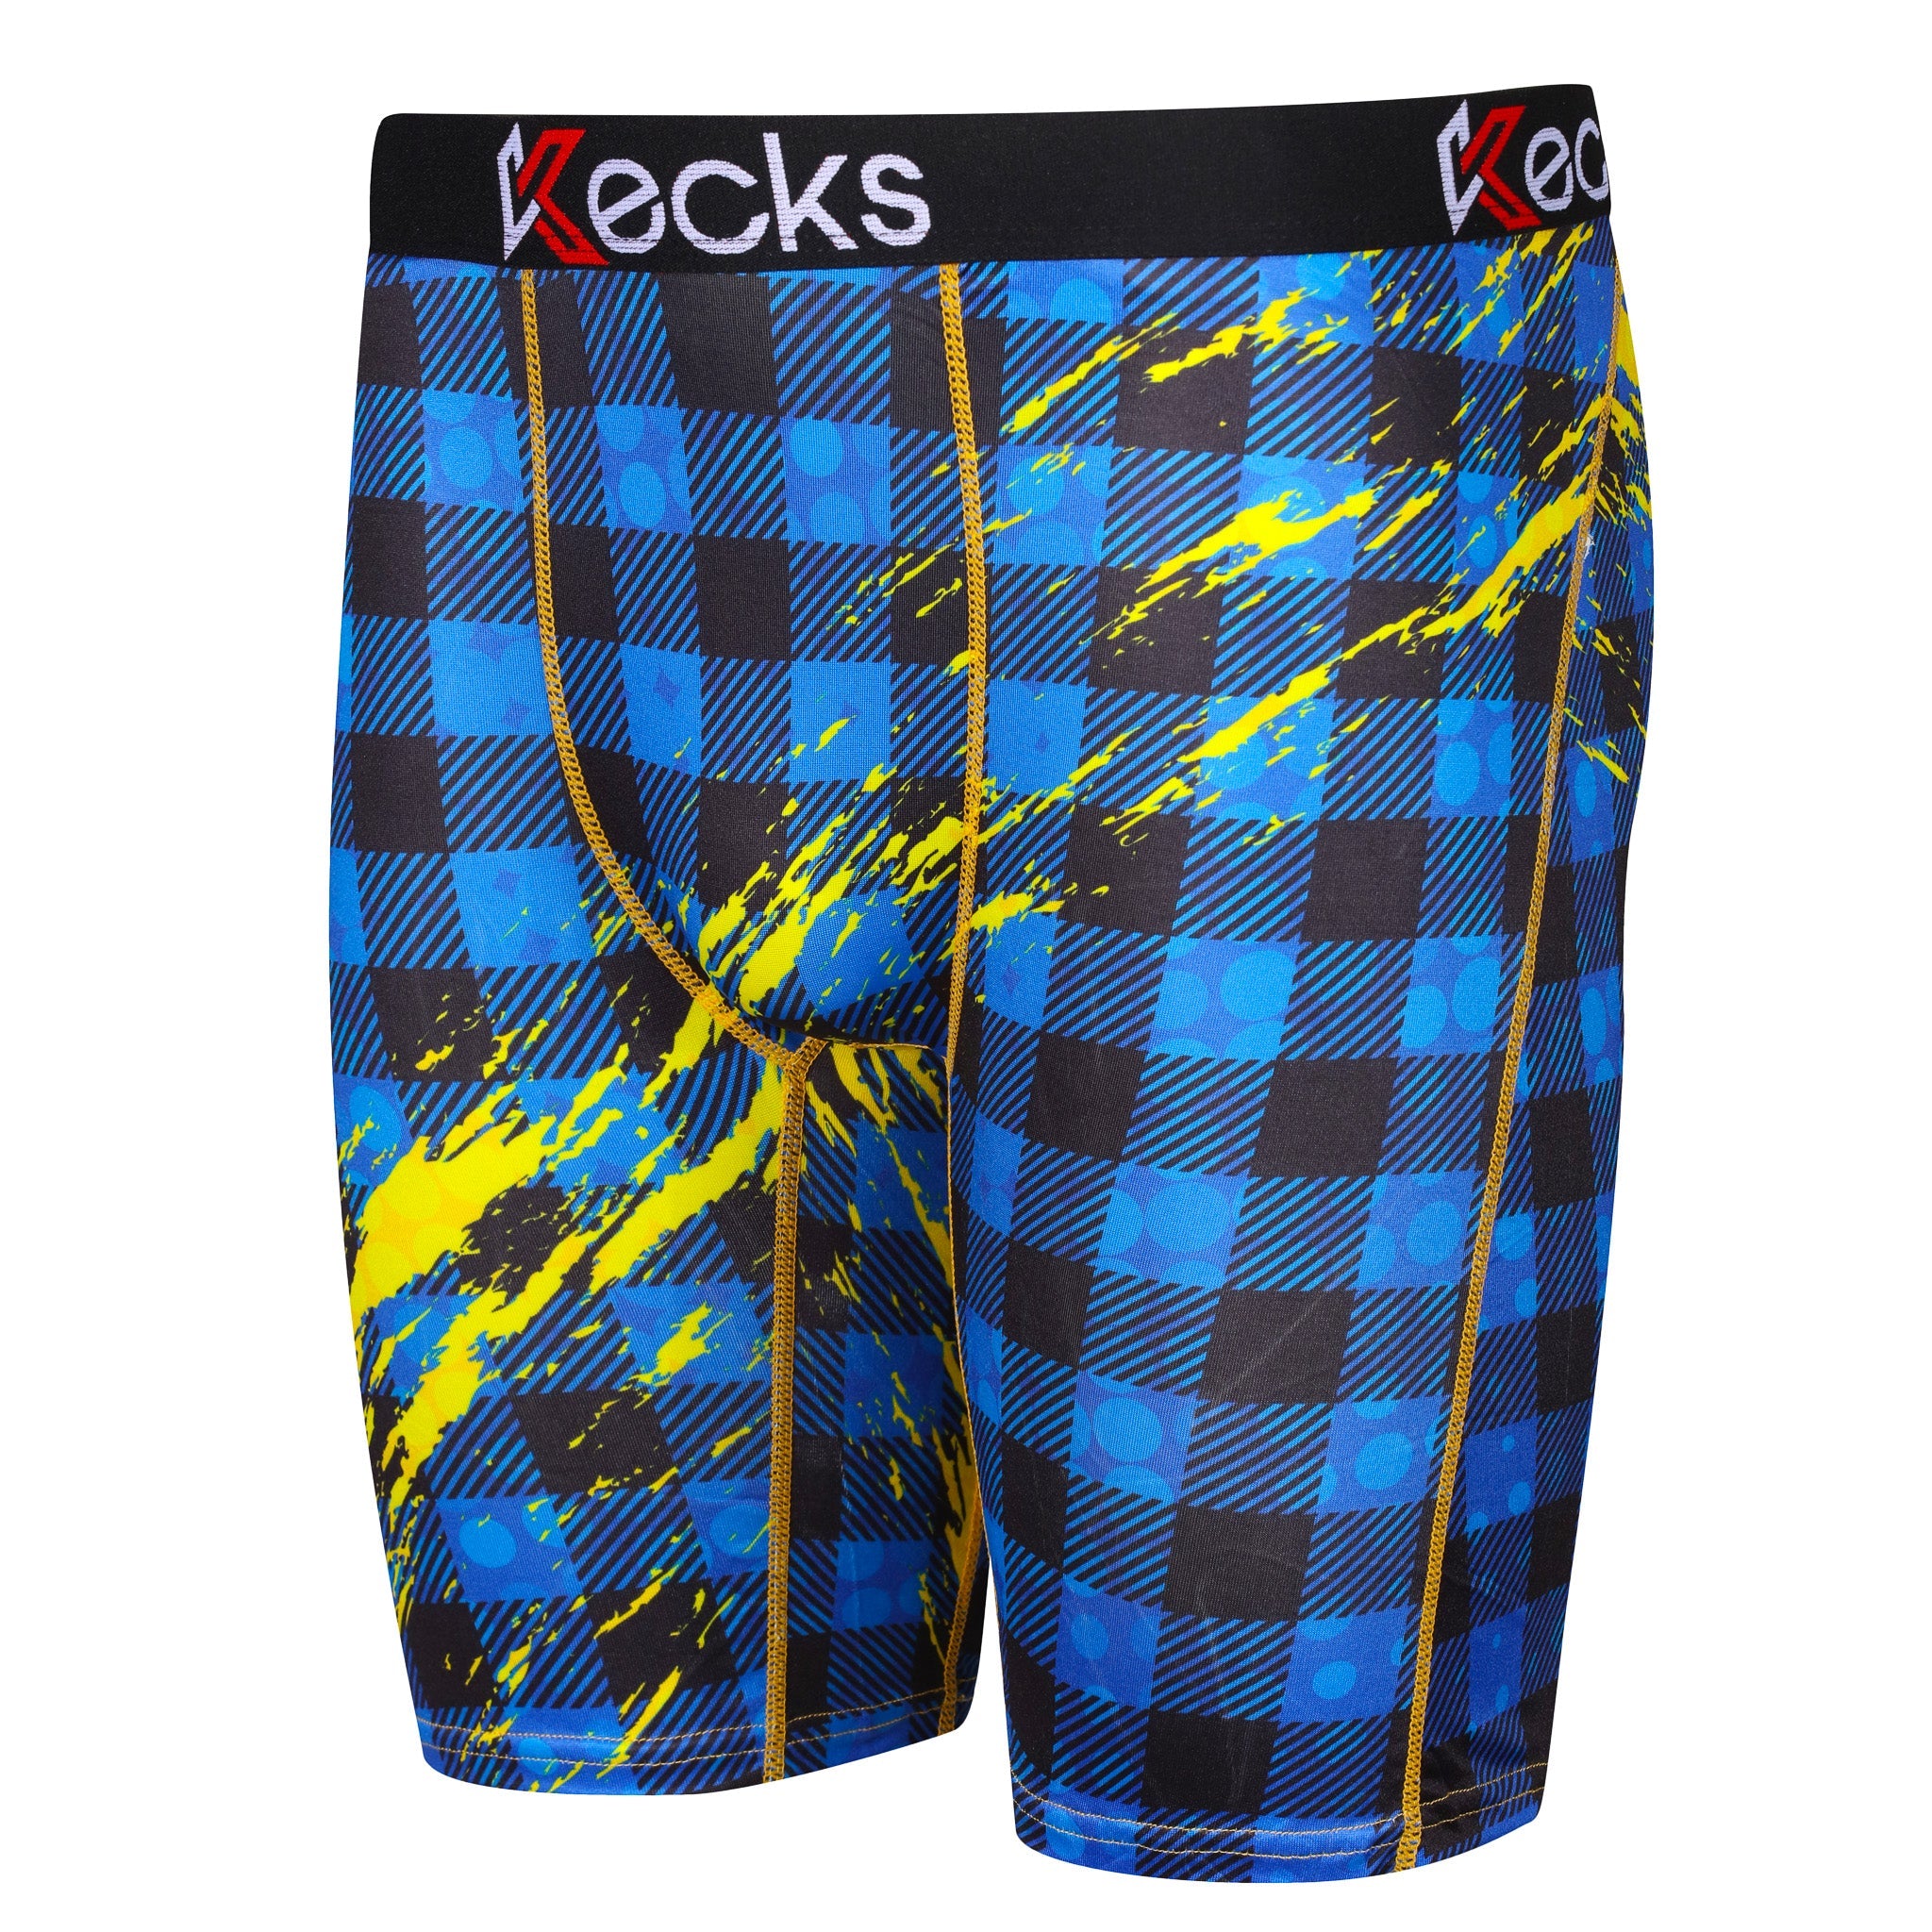 Kids Blue Bobtail Print Boxer Shorts, Mens Sports Underwear